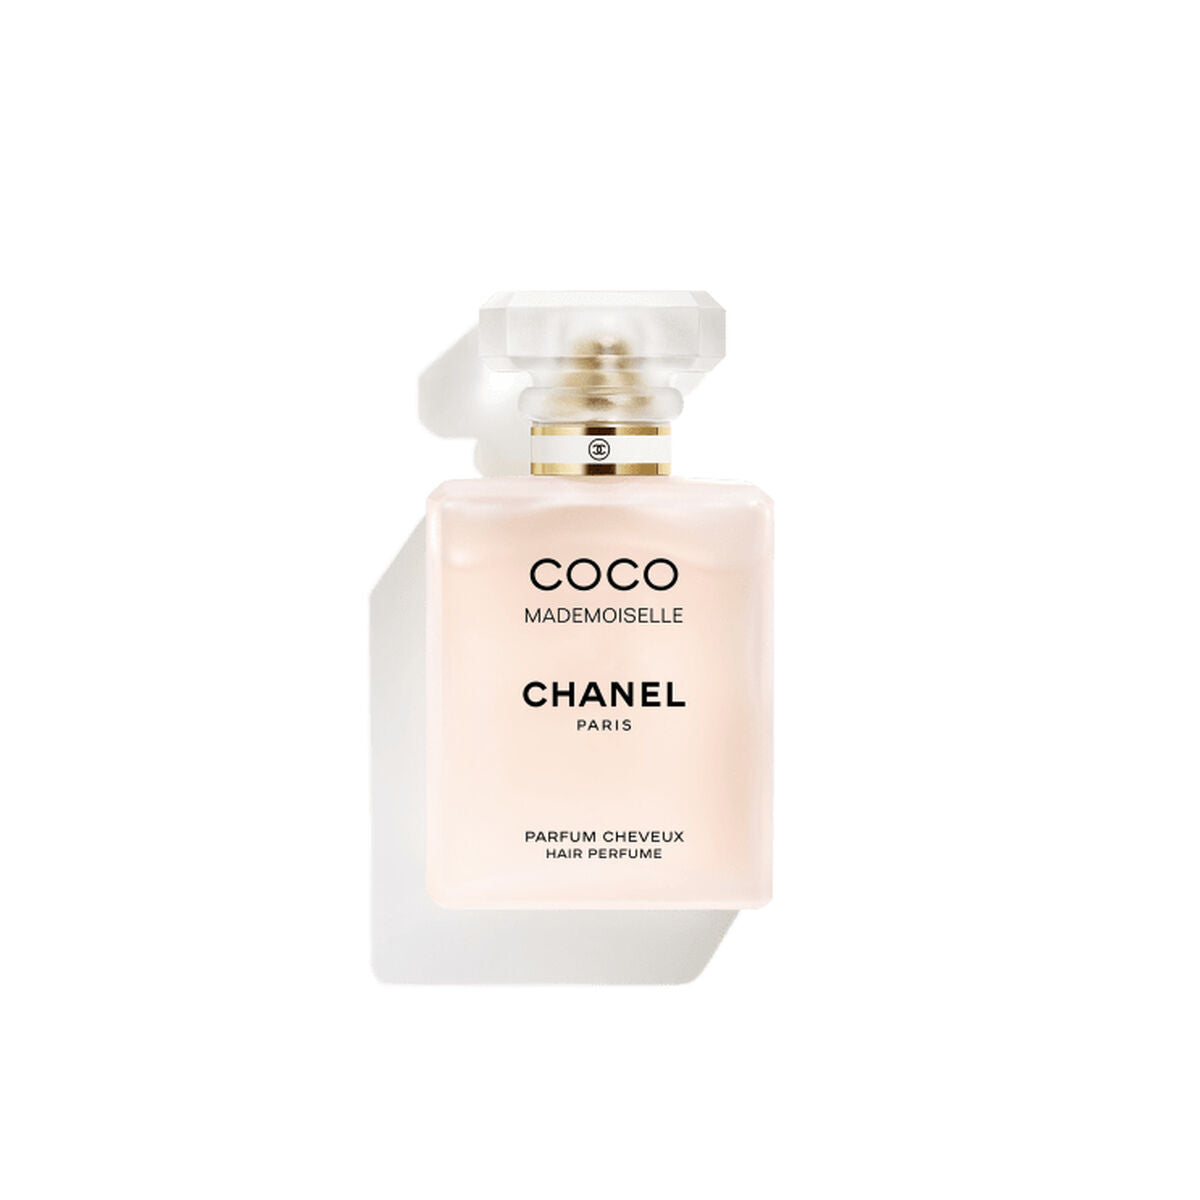 Kaufe Unisex-Parfüm Chanel COCO MADEMOISELLE 35 ml bei AWK Flagship um € 156.00